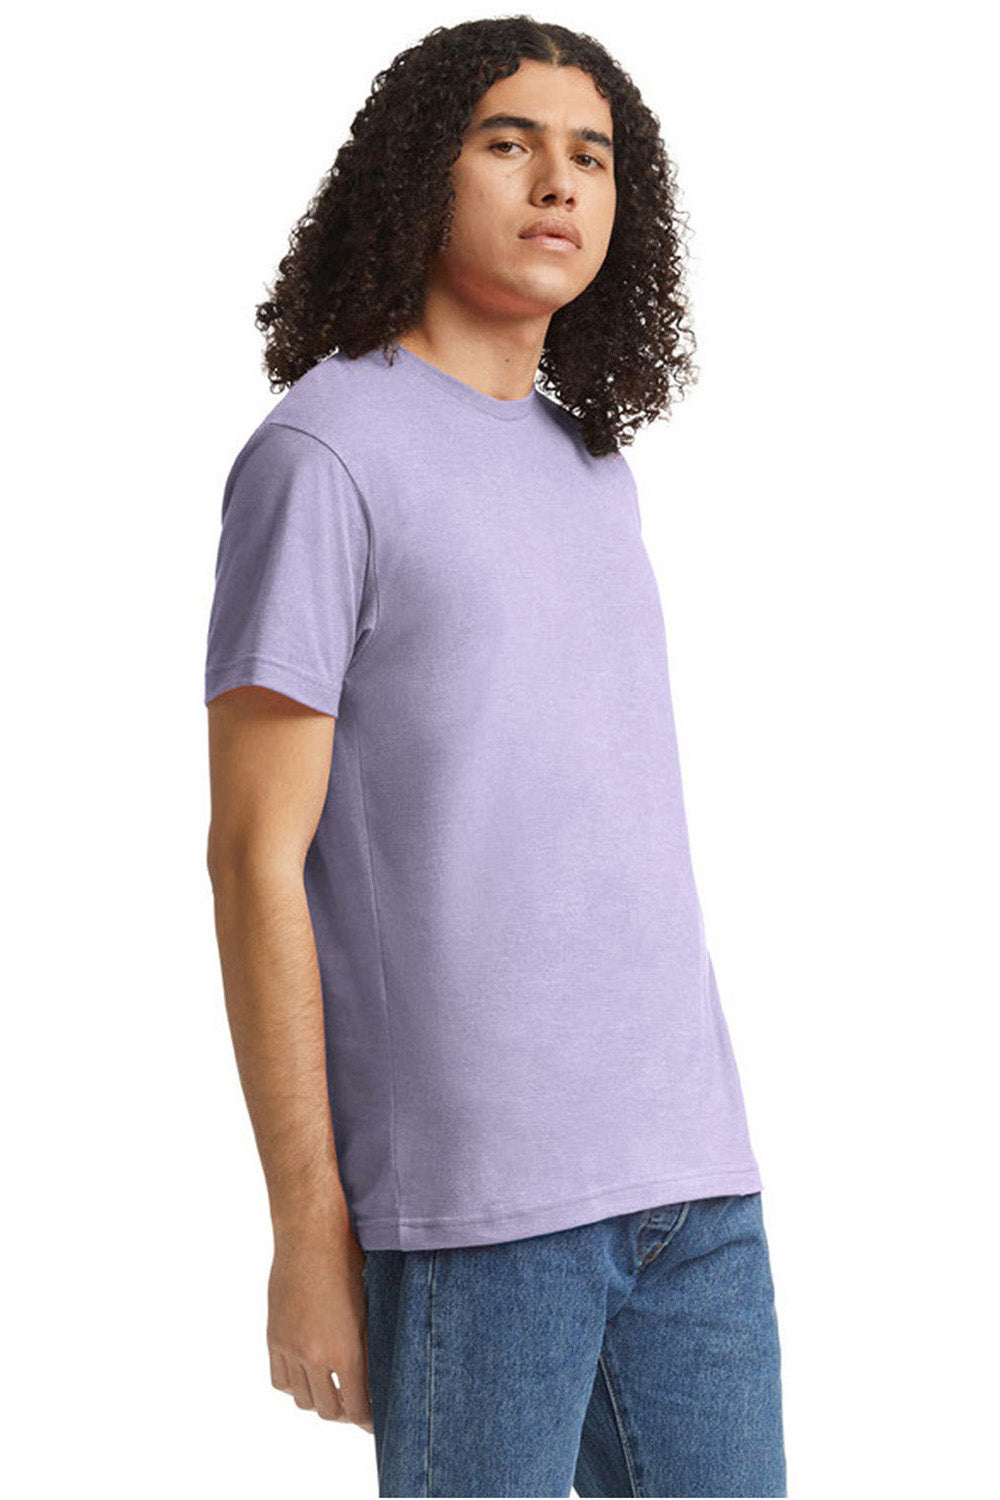 American Apparel 2001CVC Mens CVC Short Sleeve Crewneck T-Shirt Heather Lilac Purple Model Side